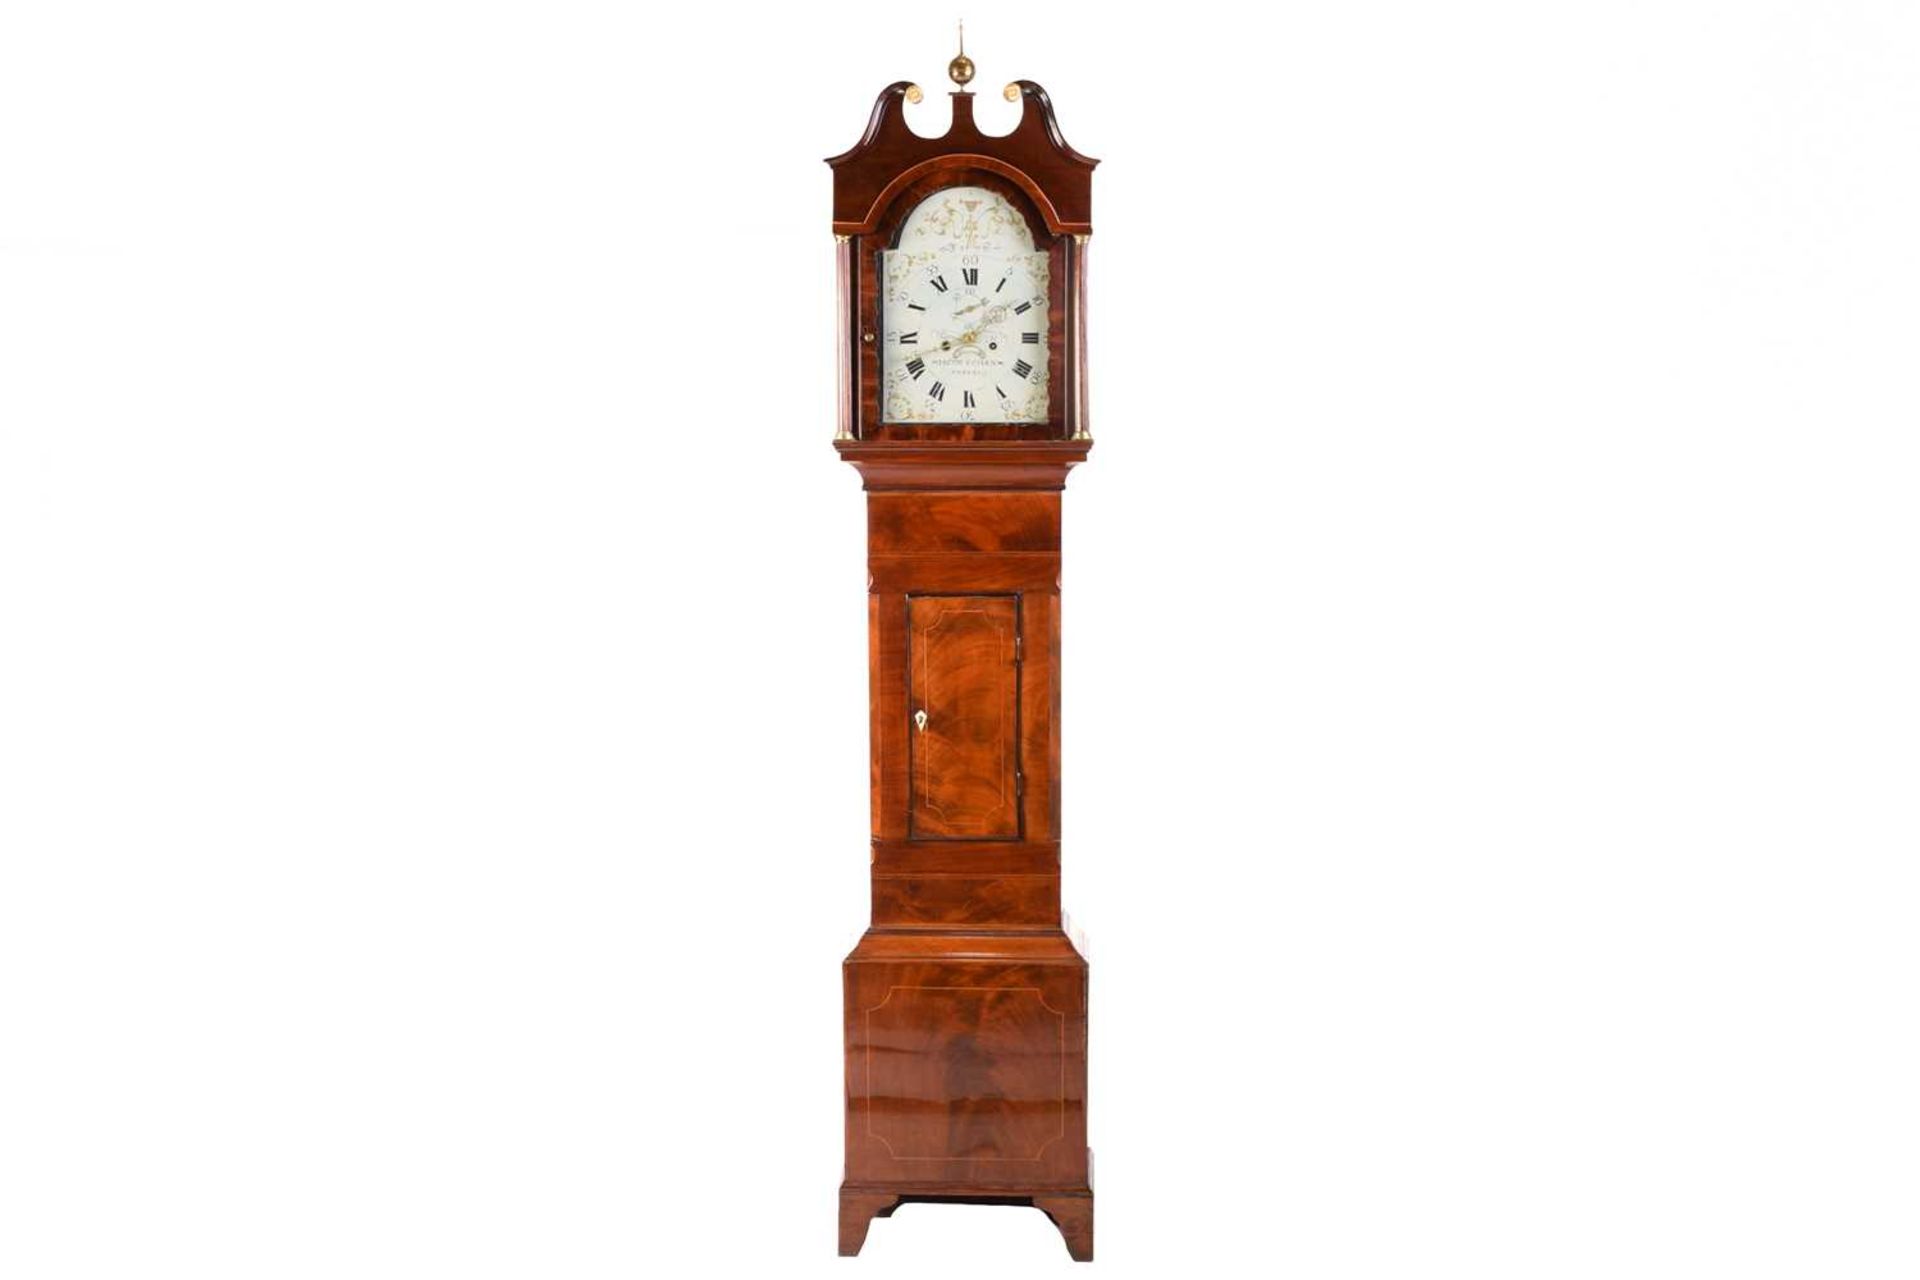 Jacob Cohan (Cohen) Swansea; an unusual documented George III mahogany longcase clock, the broken